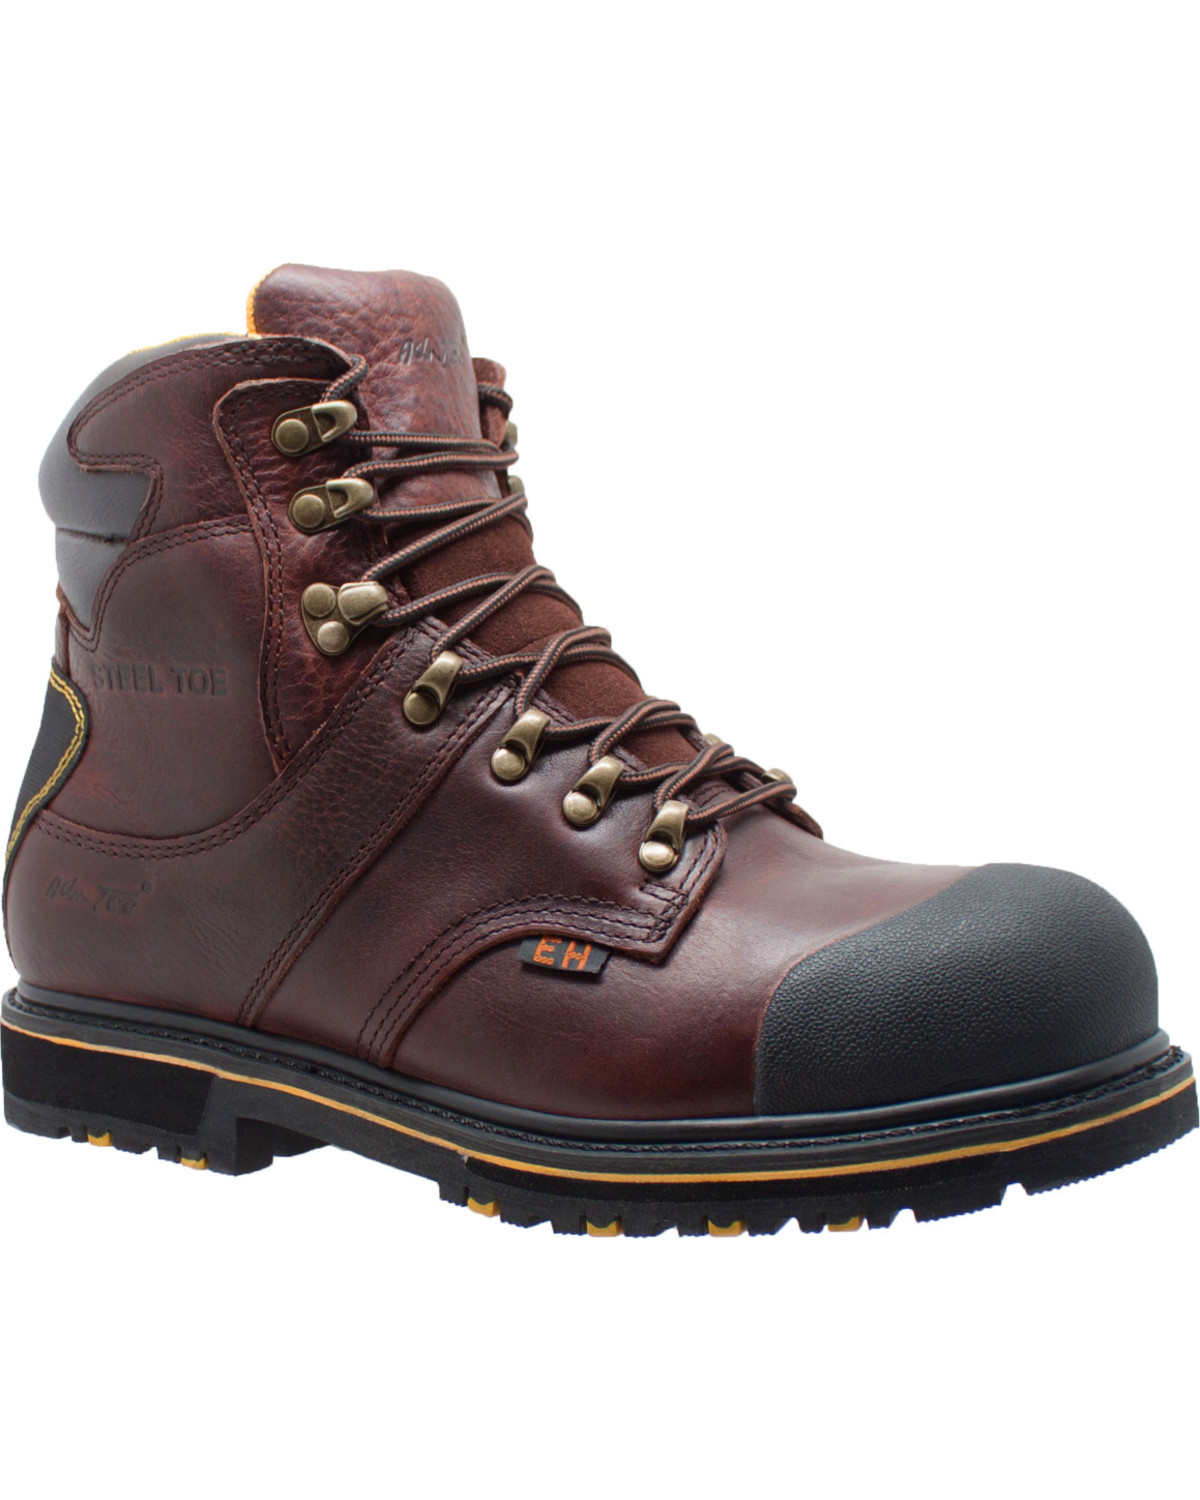 Ad Tec Men's 6" Leather EH Waterproof Work Boots - Steel Toe